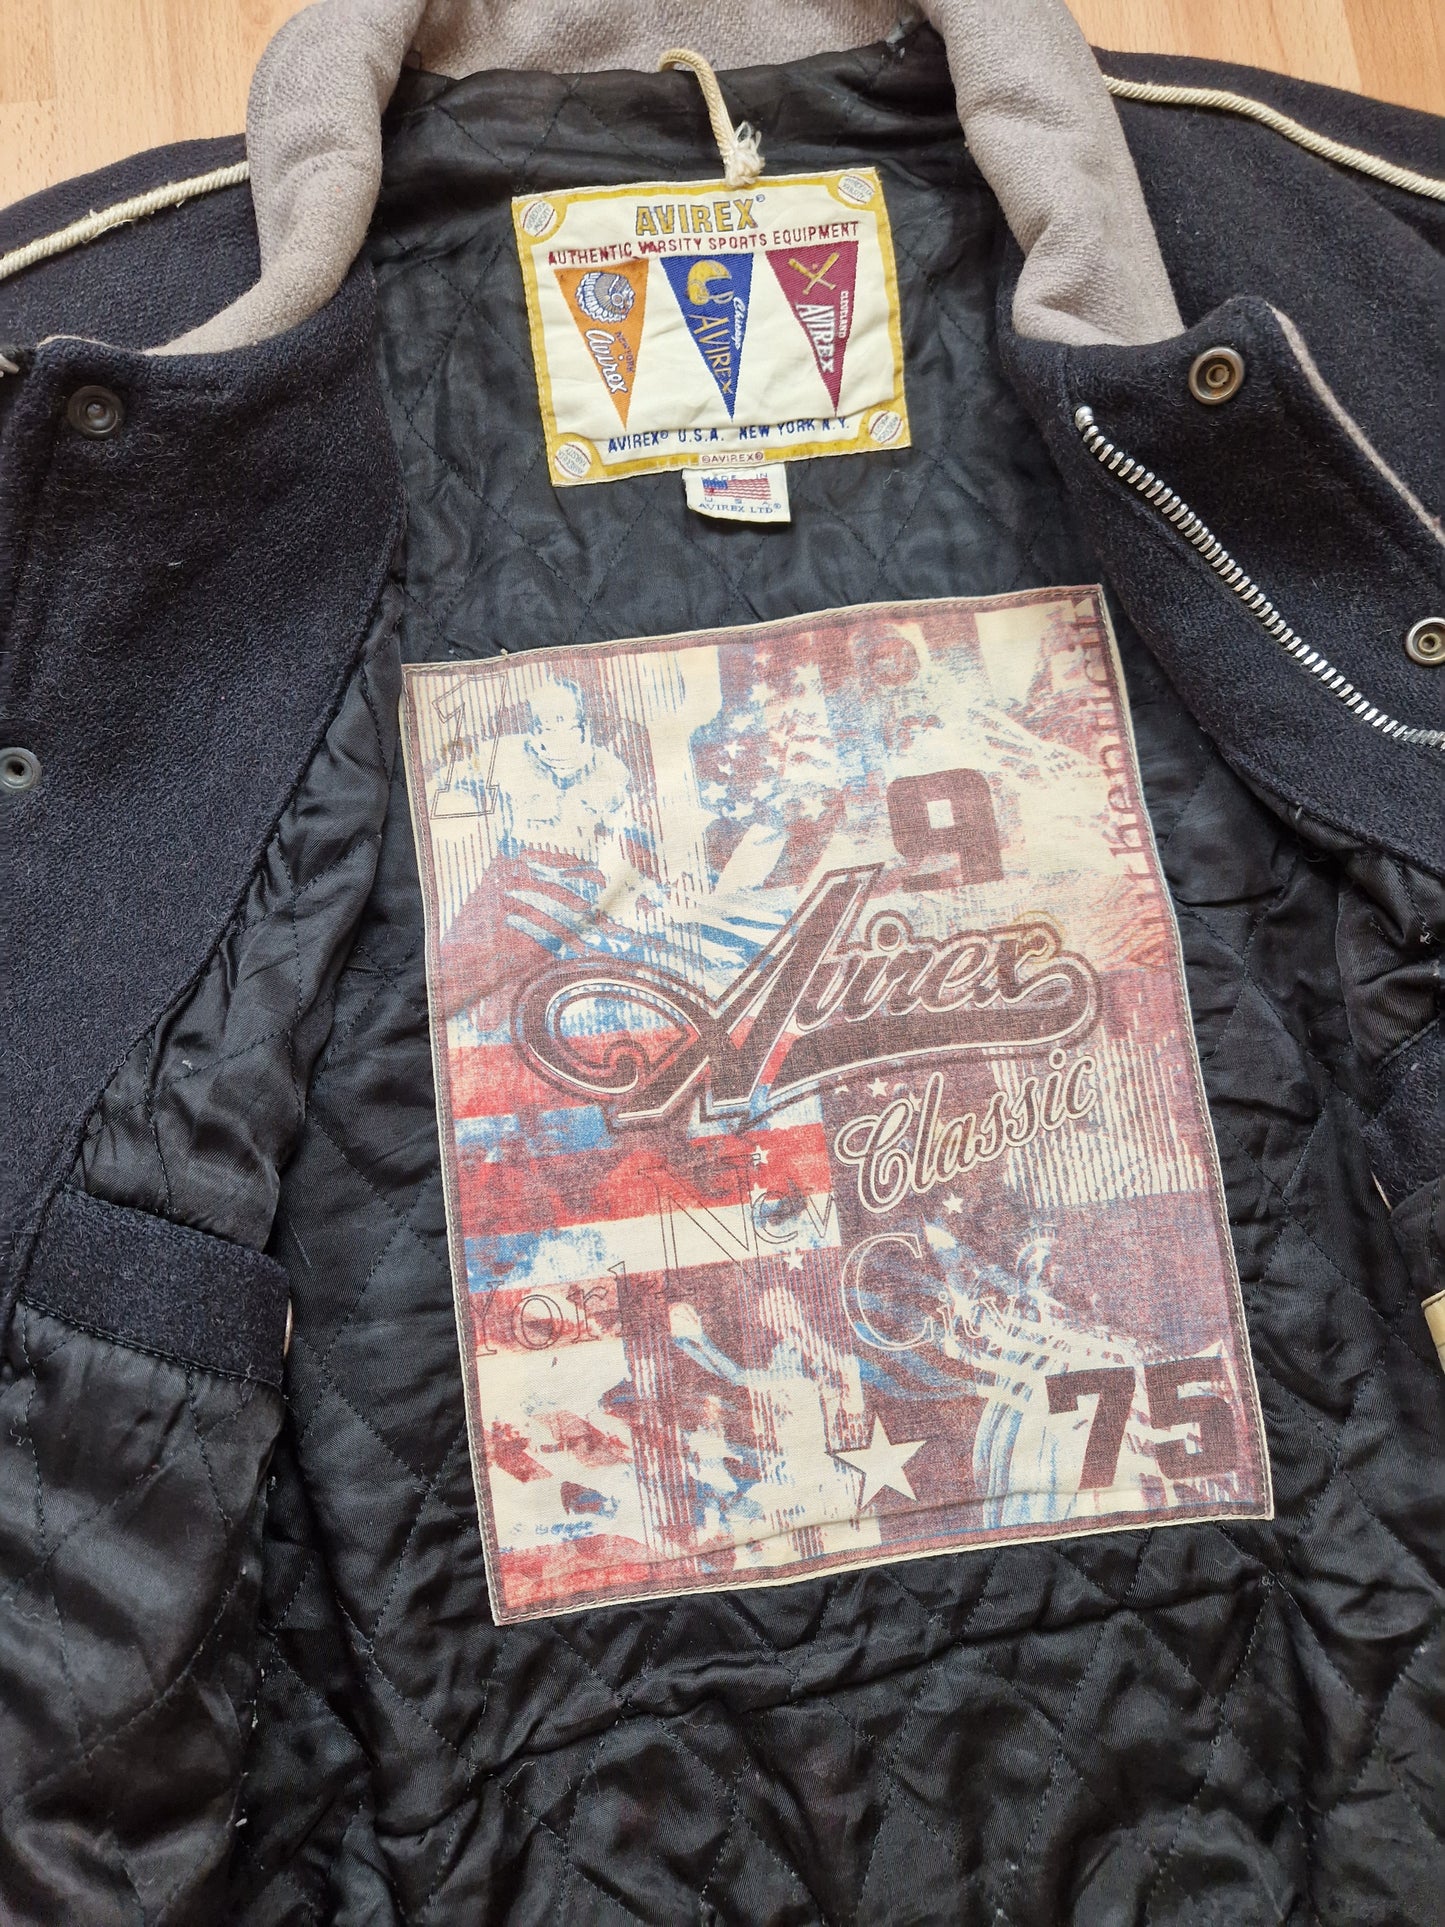 Vintage 90s Avirex Heavyweight Wool Varsity Jacket (XL)